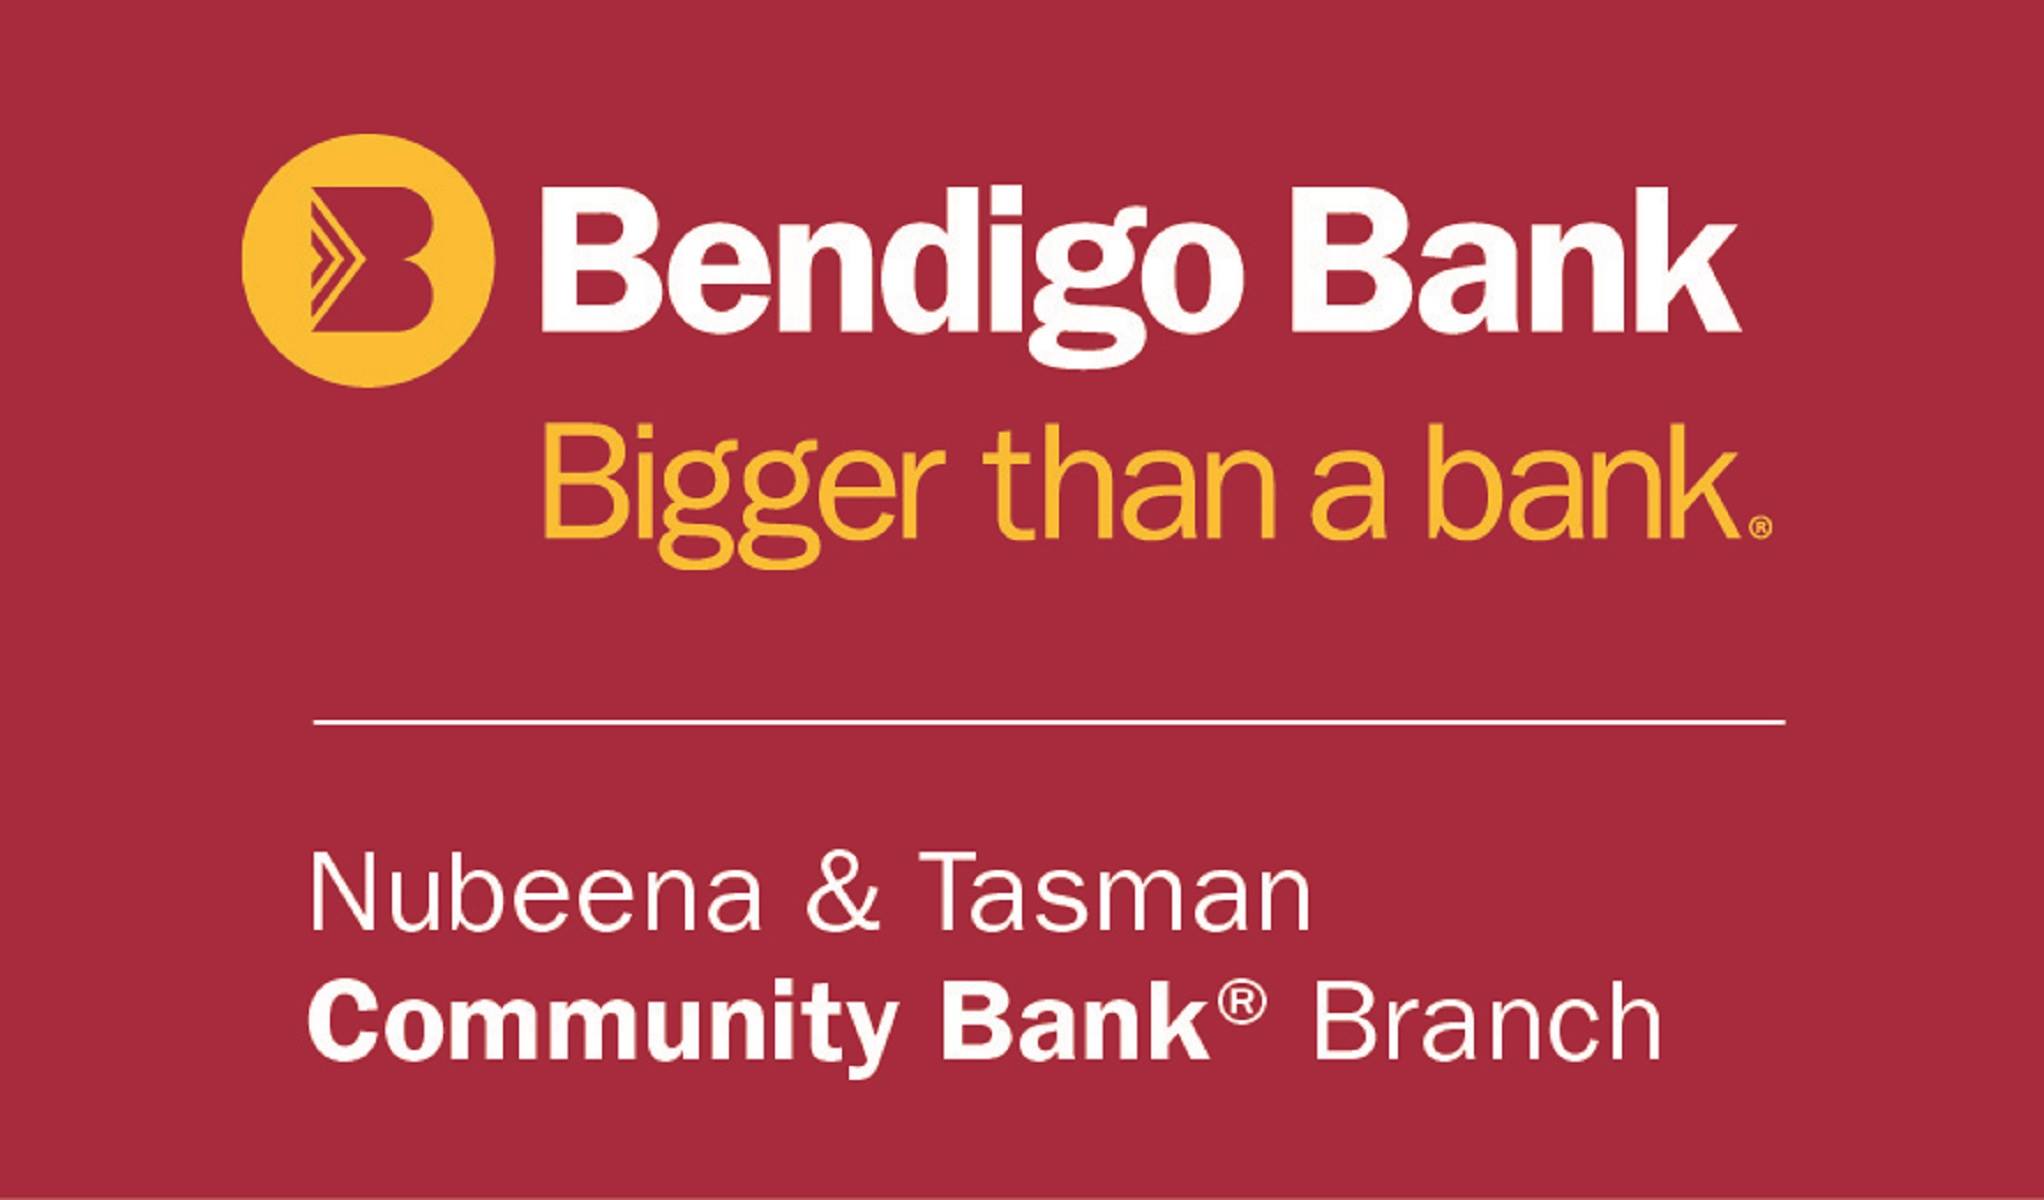 Nubeena and Tasman Bendigo Bank